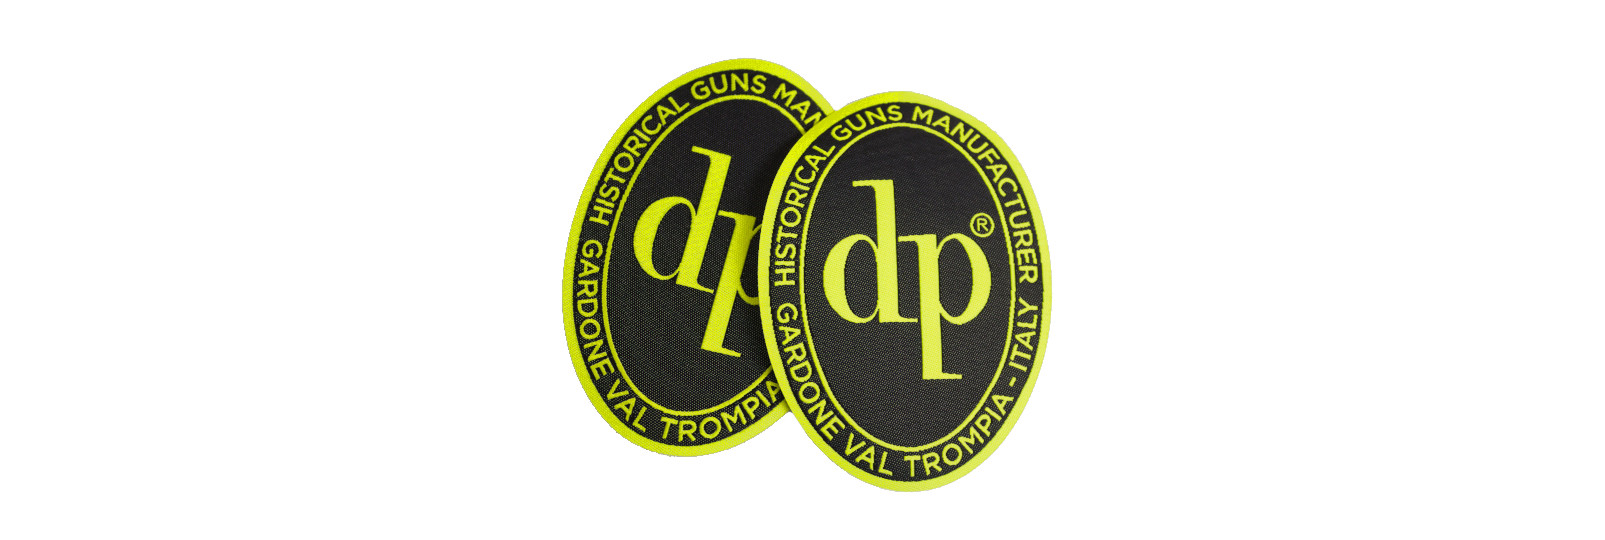 Dp logo patch